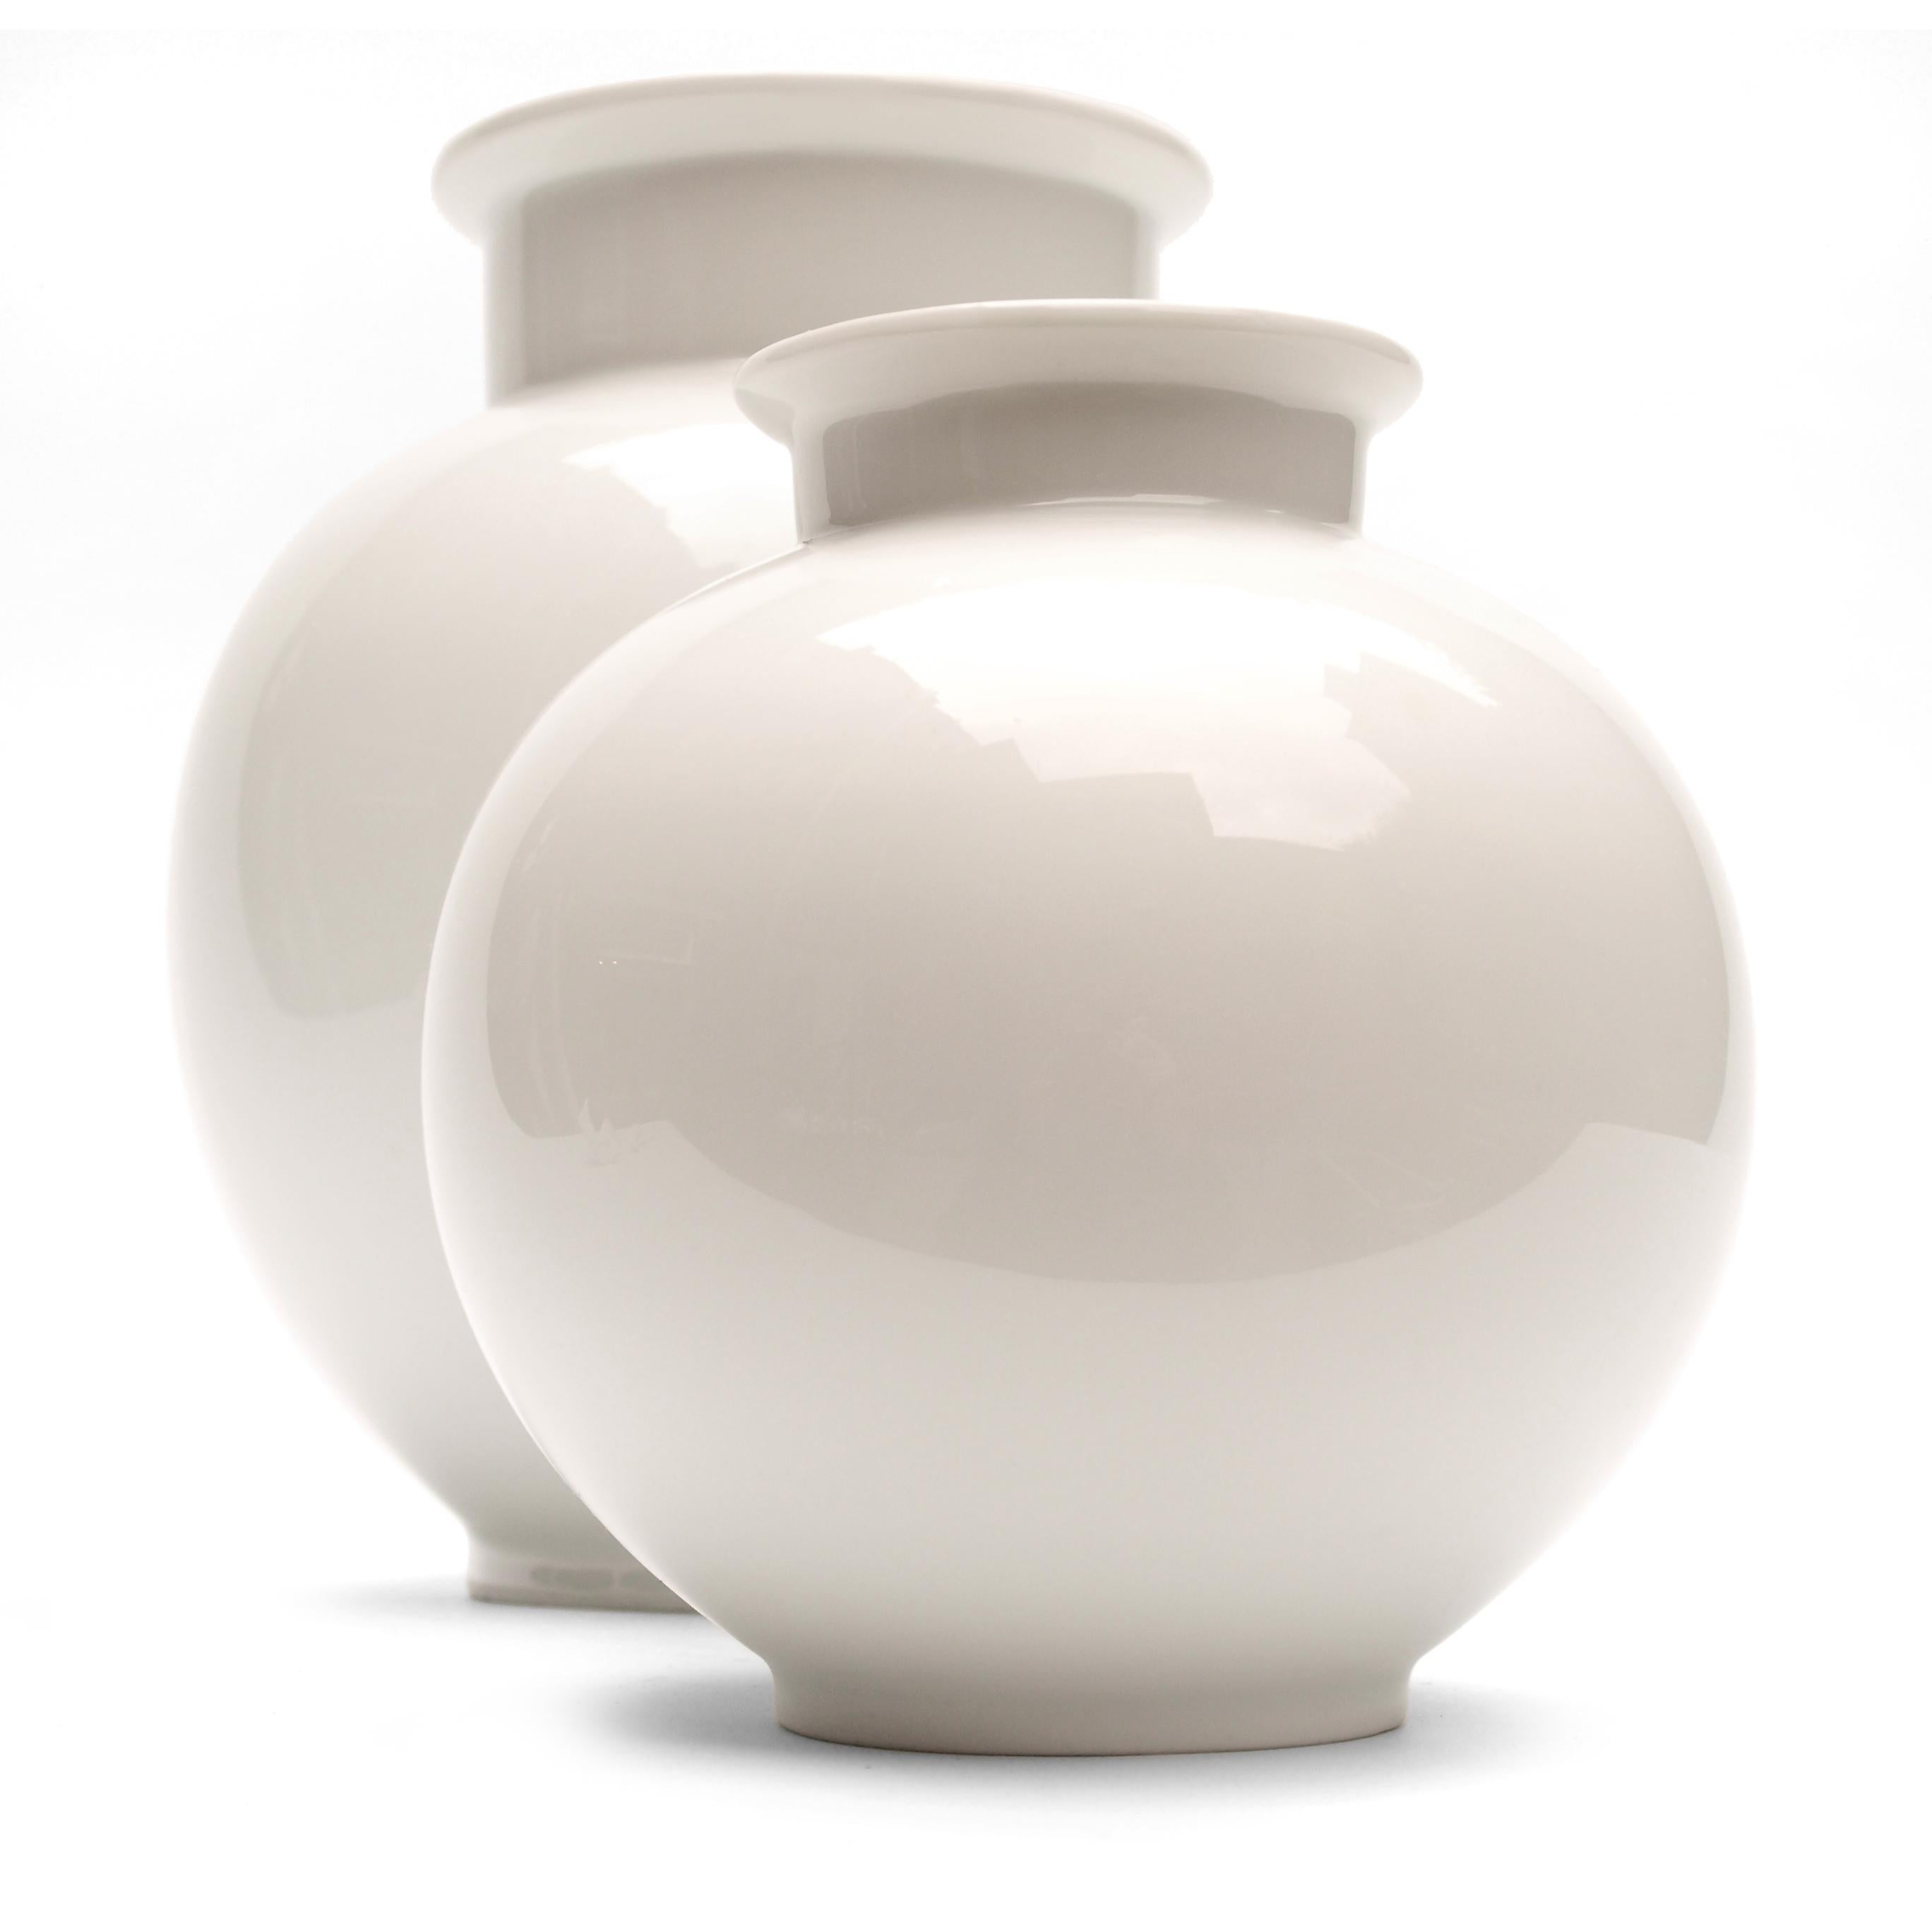 Pair of Porcelain Flower Vases by Thomas 7